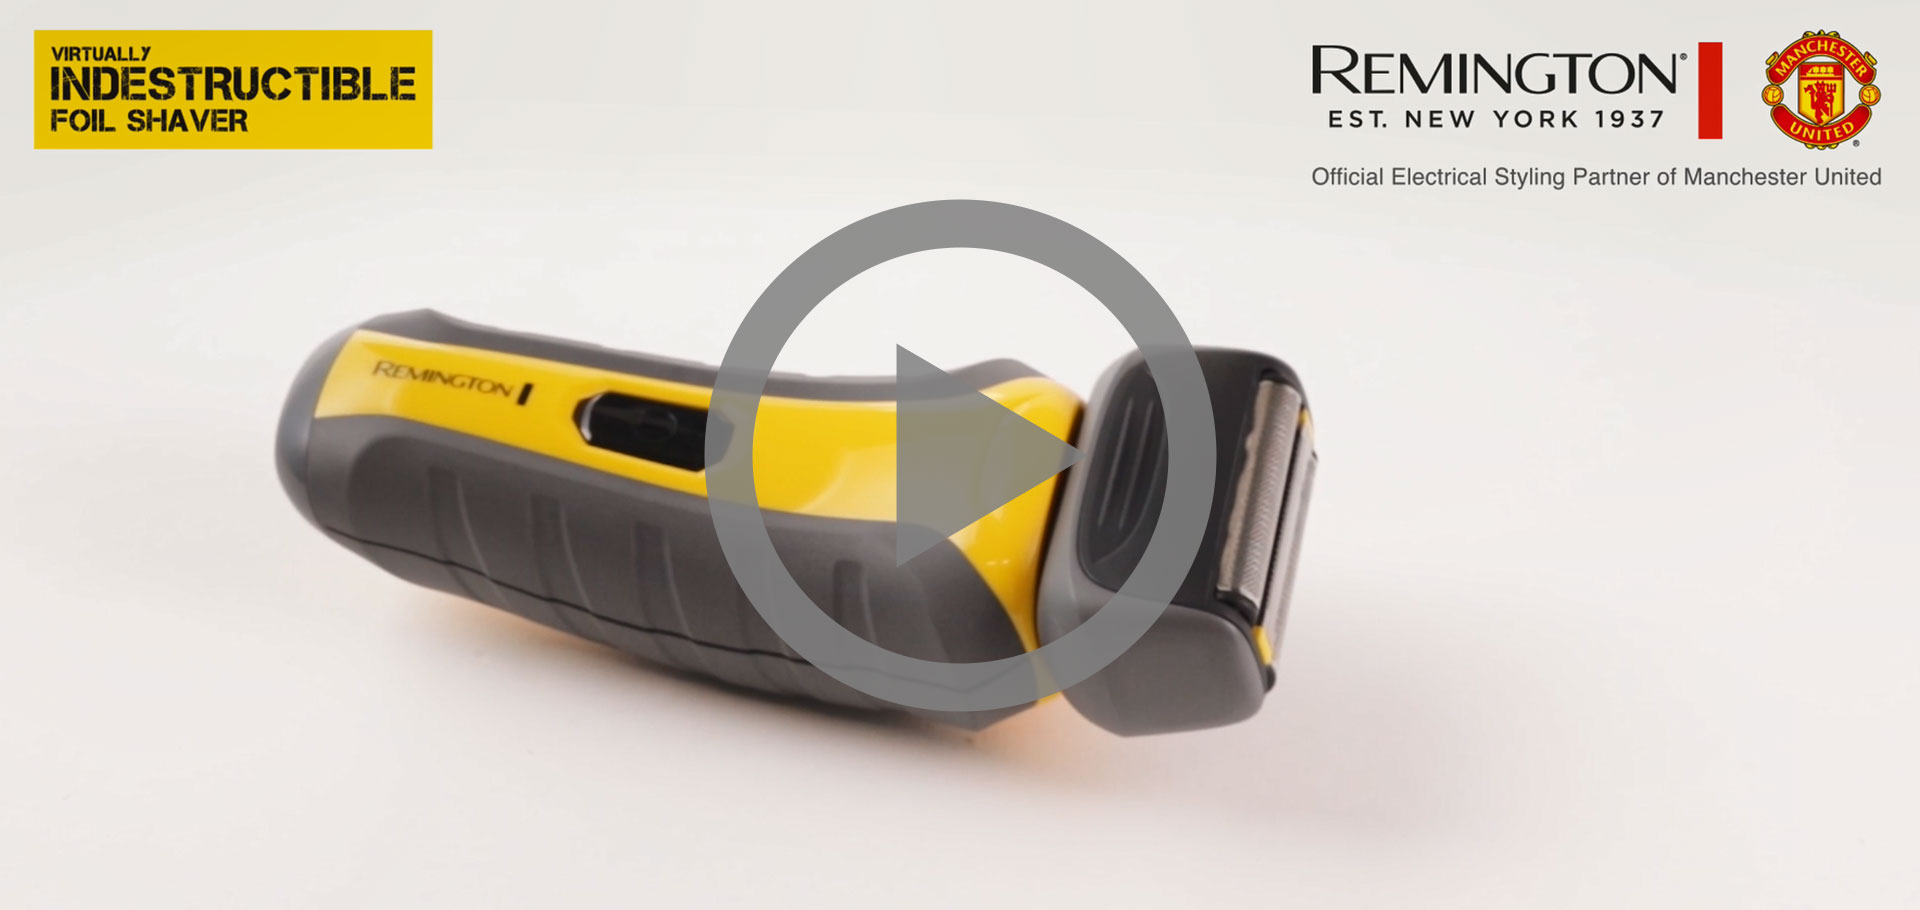 Virtually Indestructible Foil Shaver | Remington